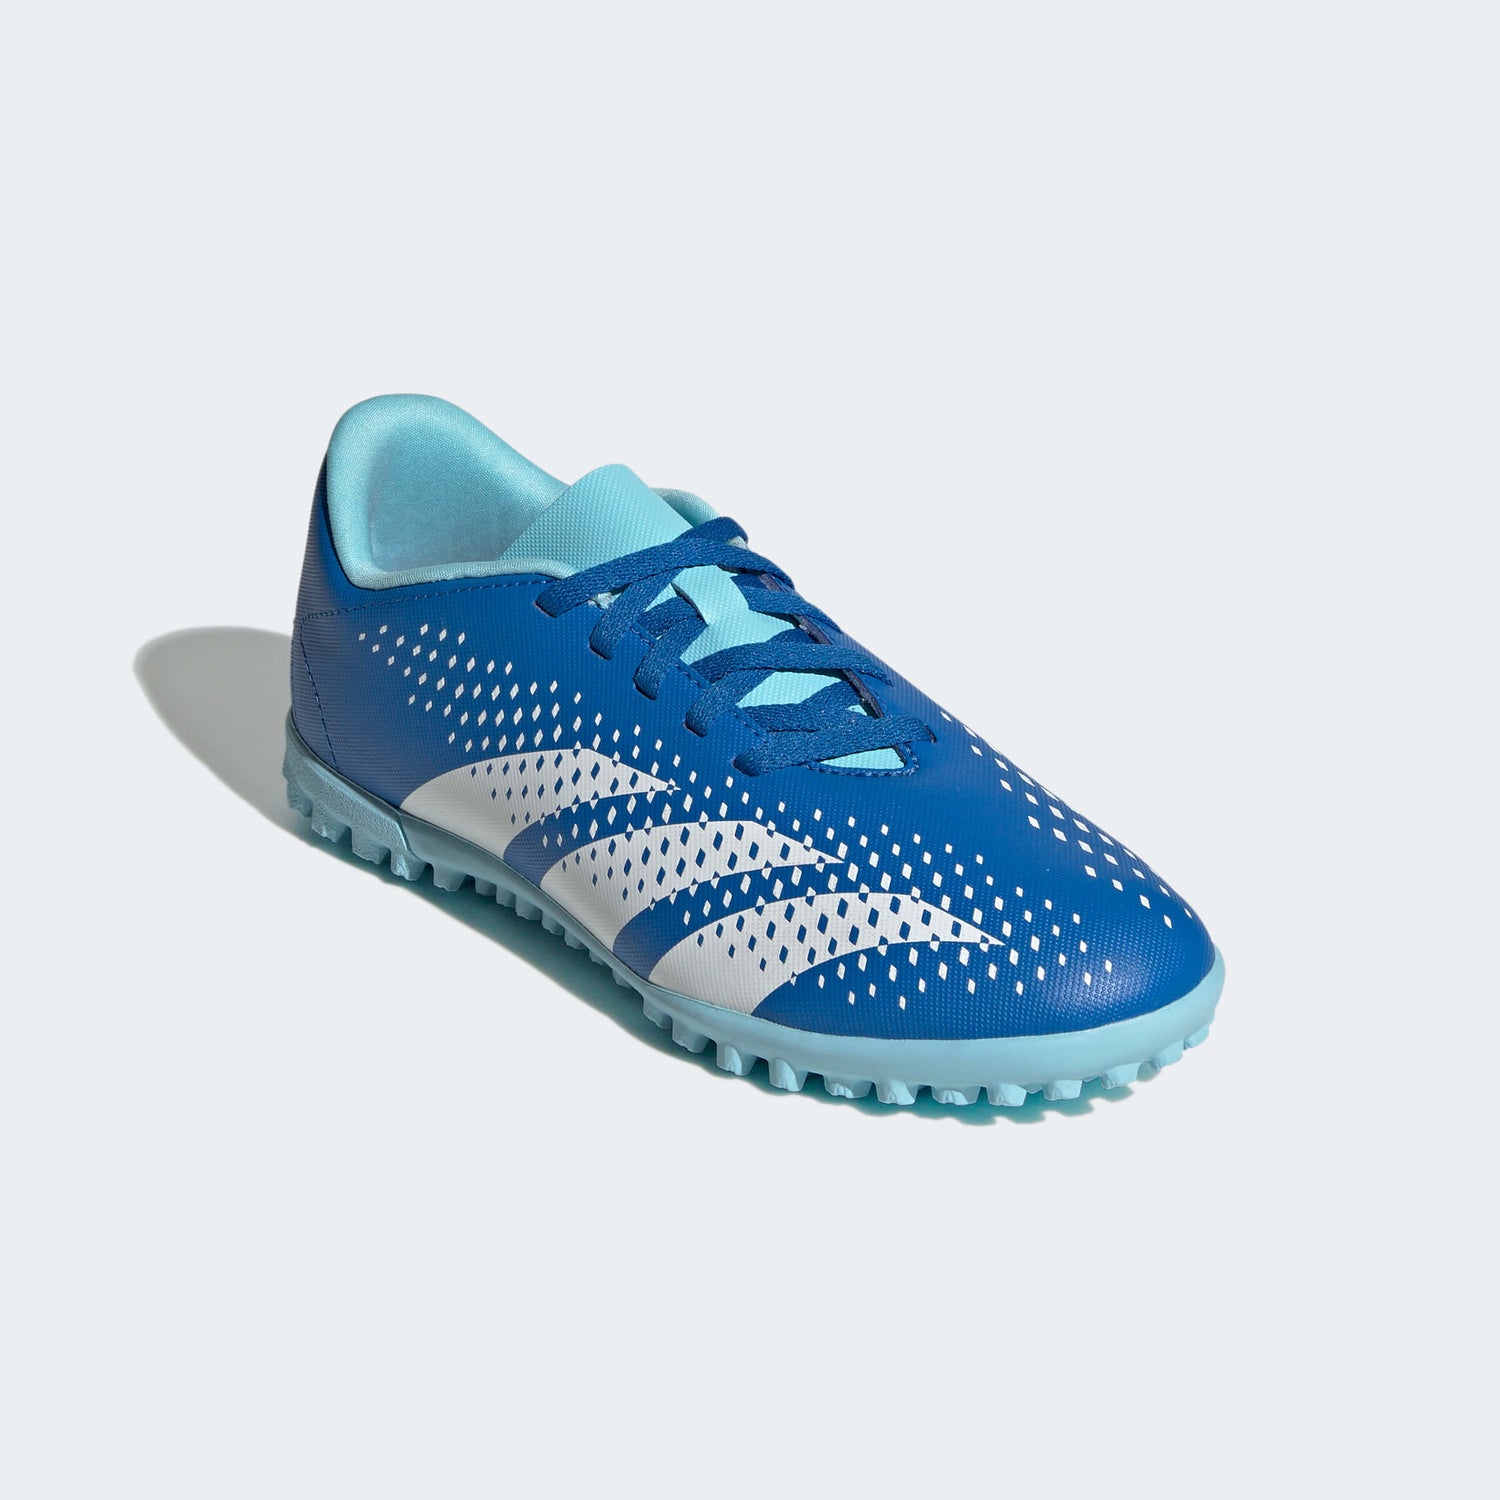 Chaussures junior de Futsal et Football bleues predator 19.3 IN adidas